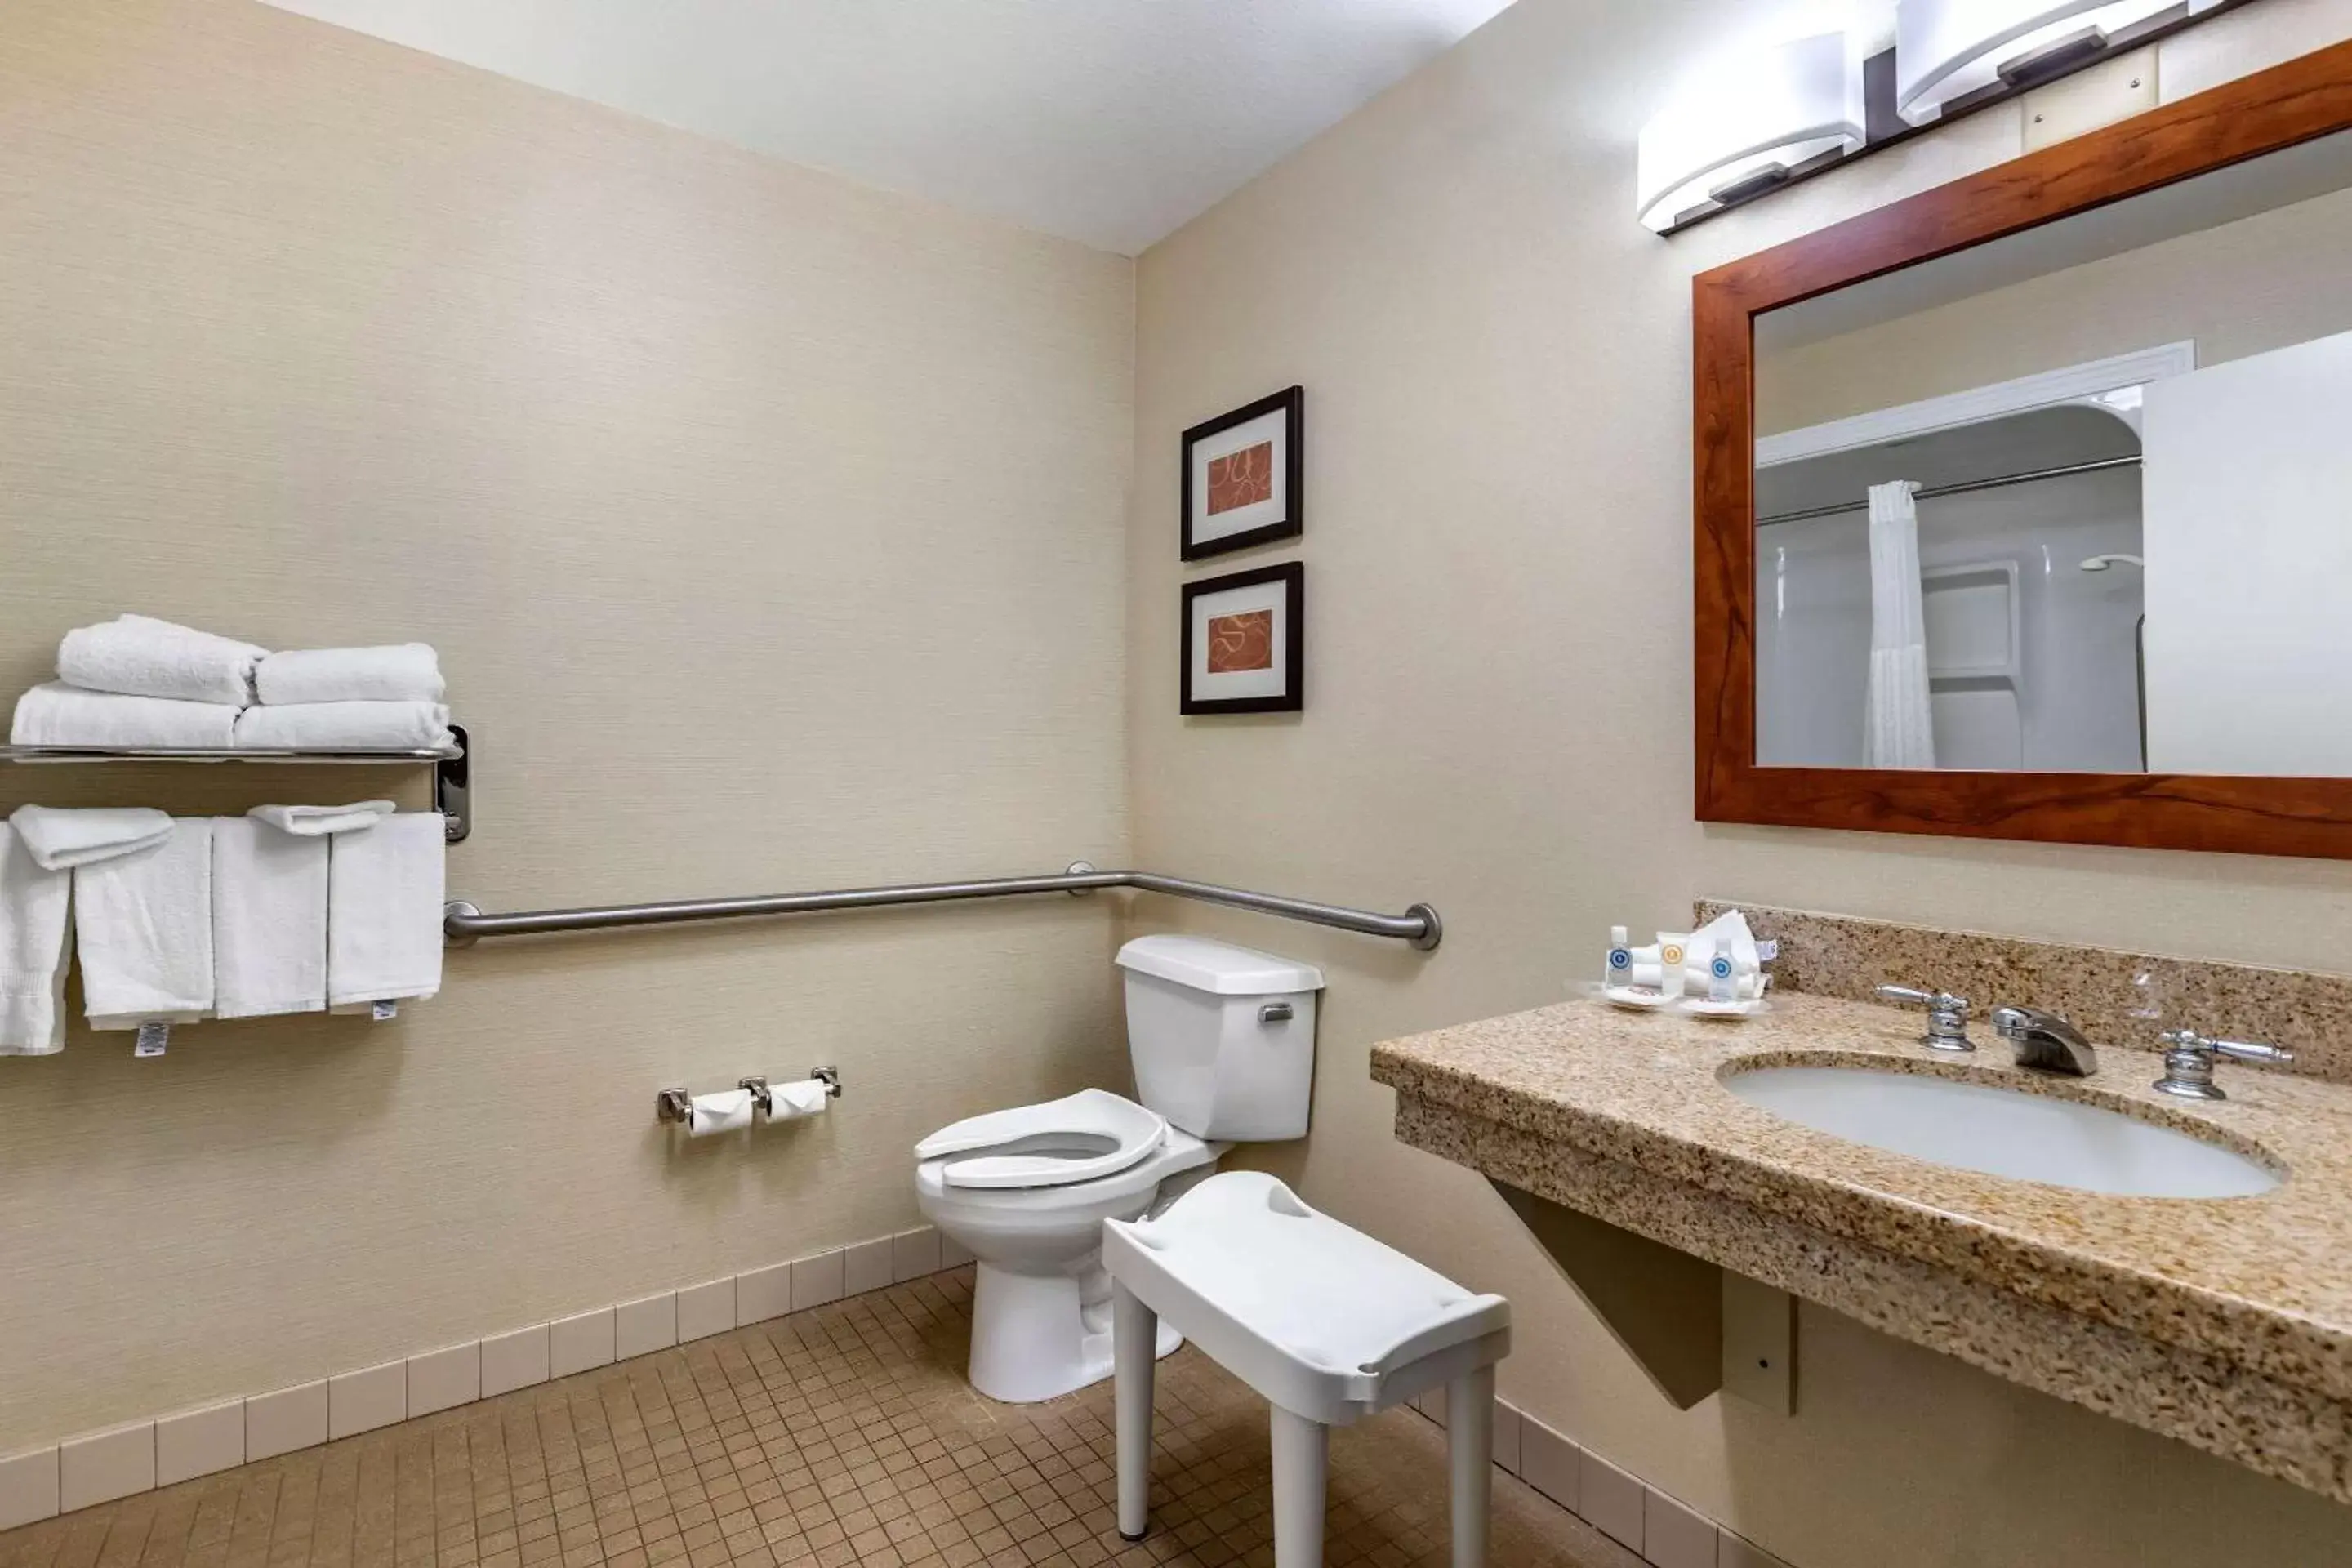 Bathroom in Comfort Suites Coralville I-80